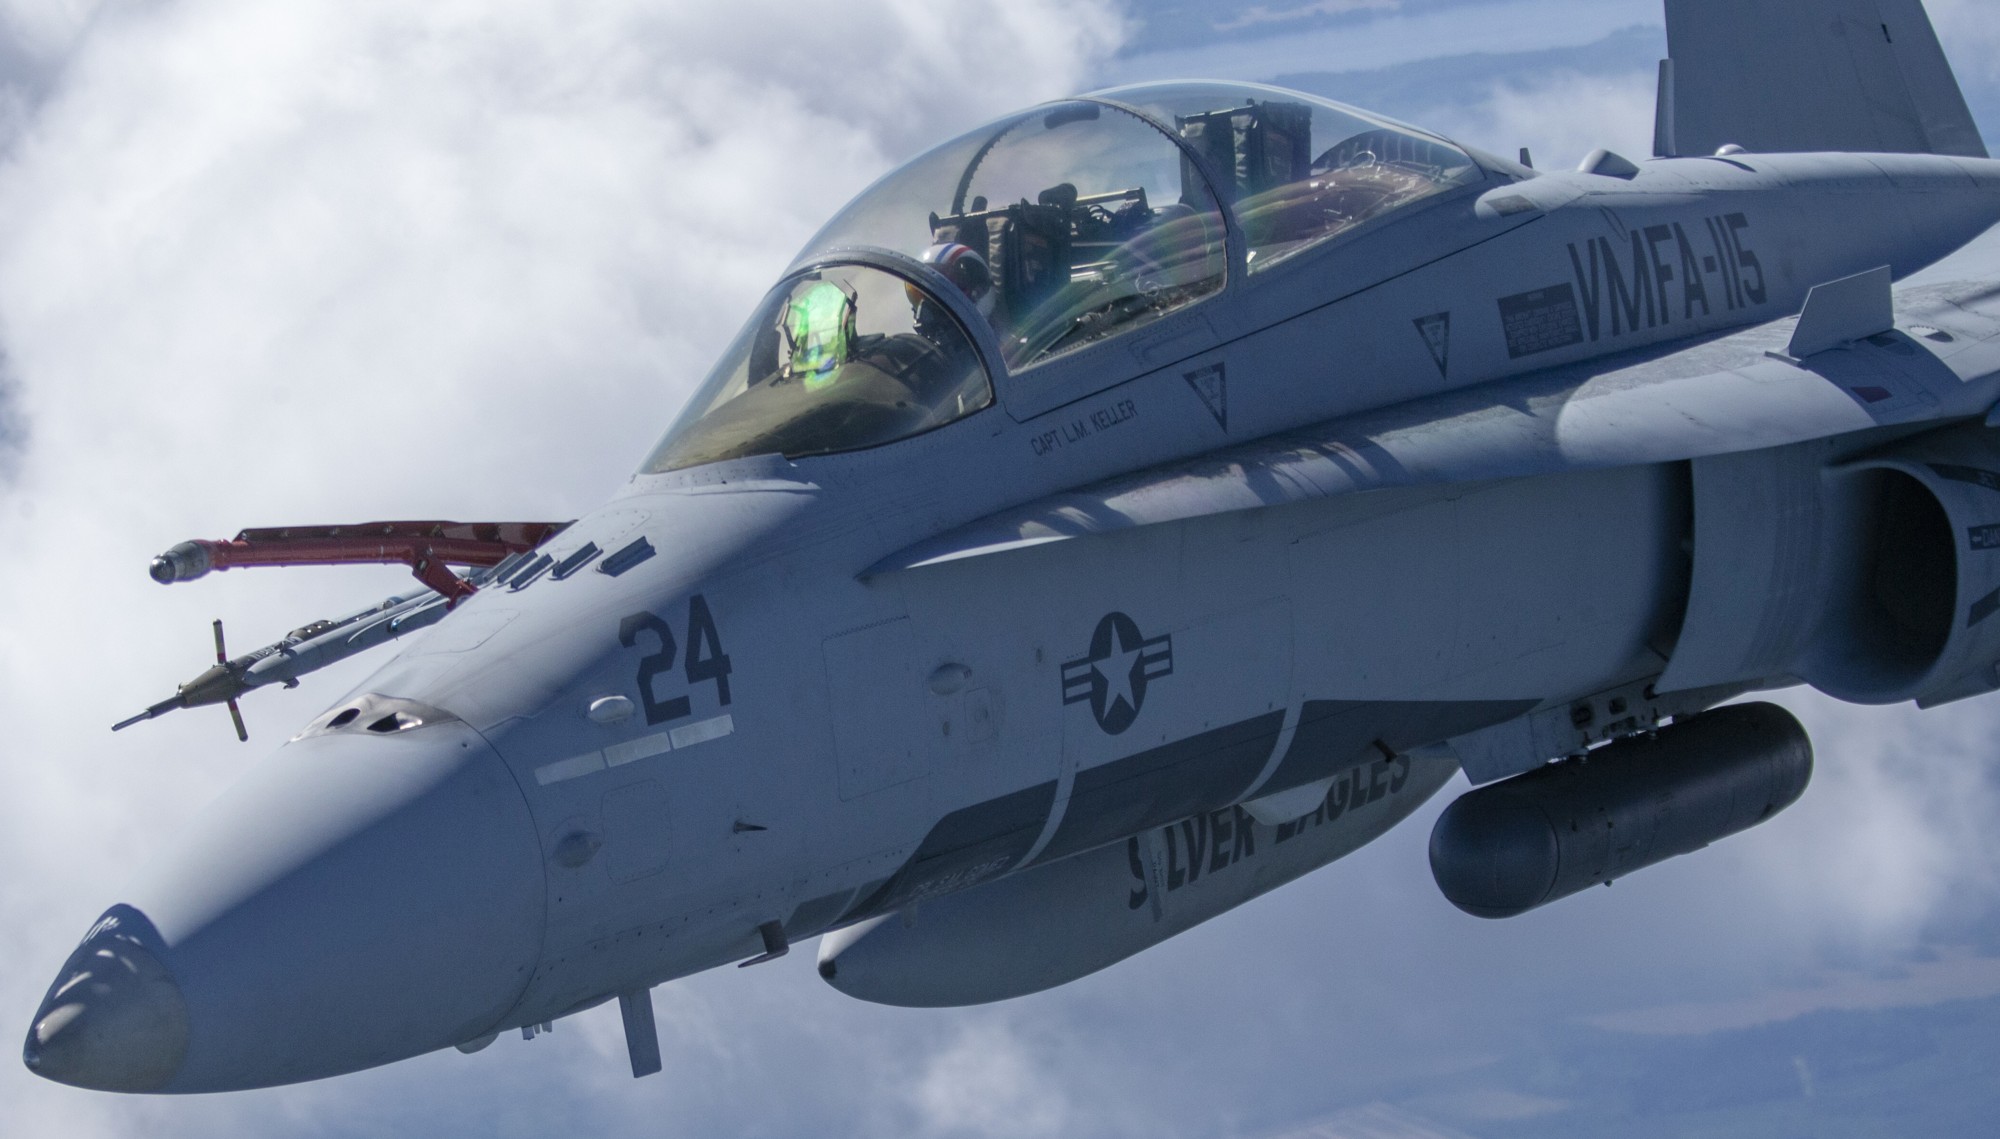 vmfa-115 silver eagles marine fighter attack squadron usmc f/a-18d hornet 224 rissala air base finland